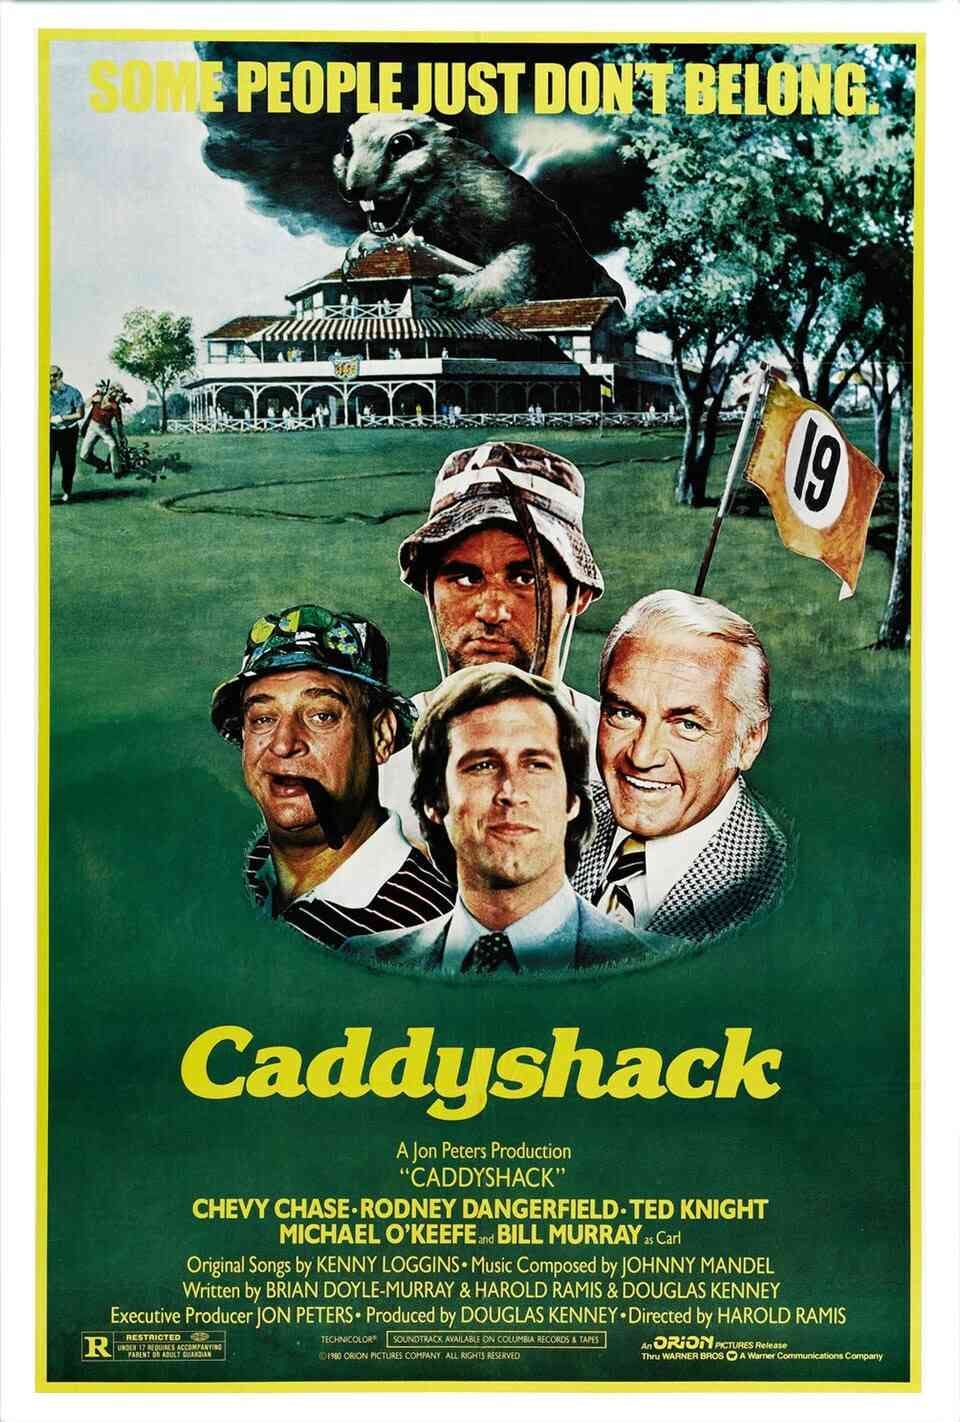 Read Caddyshack screenplay (poster)